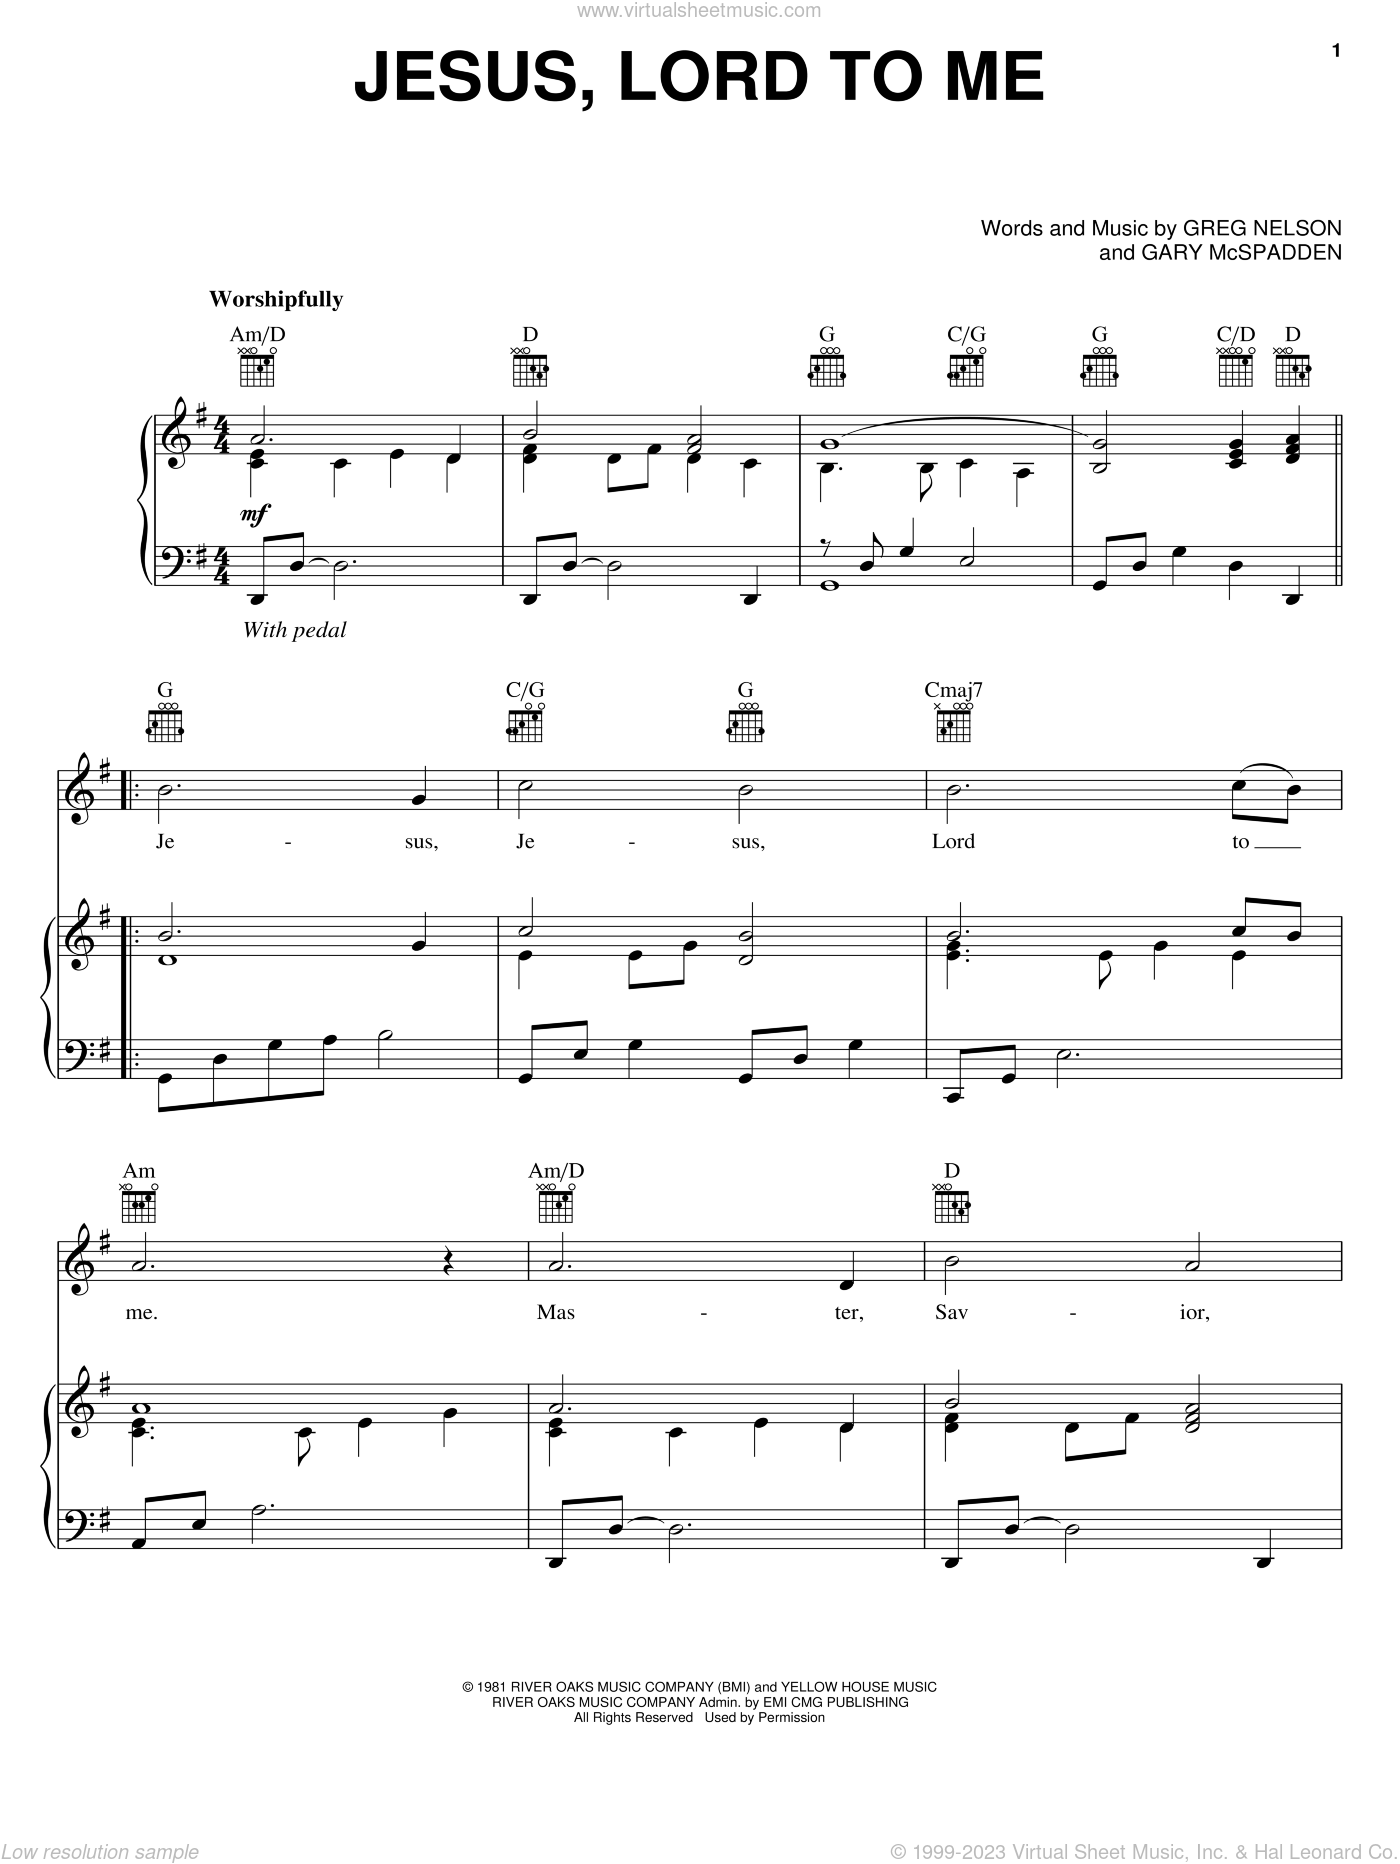 Free Lord x sheet music  Download PDF or print on